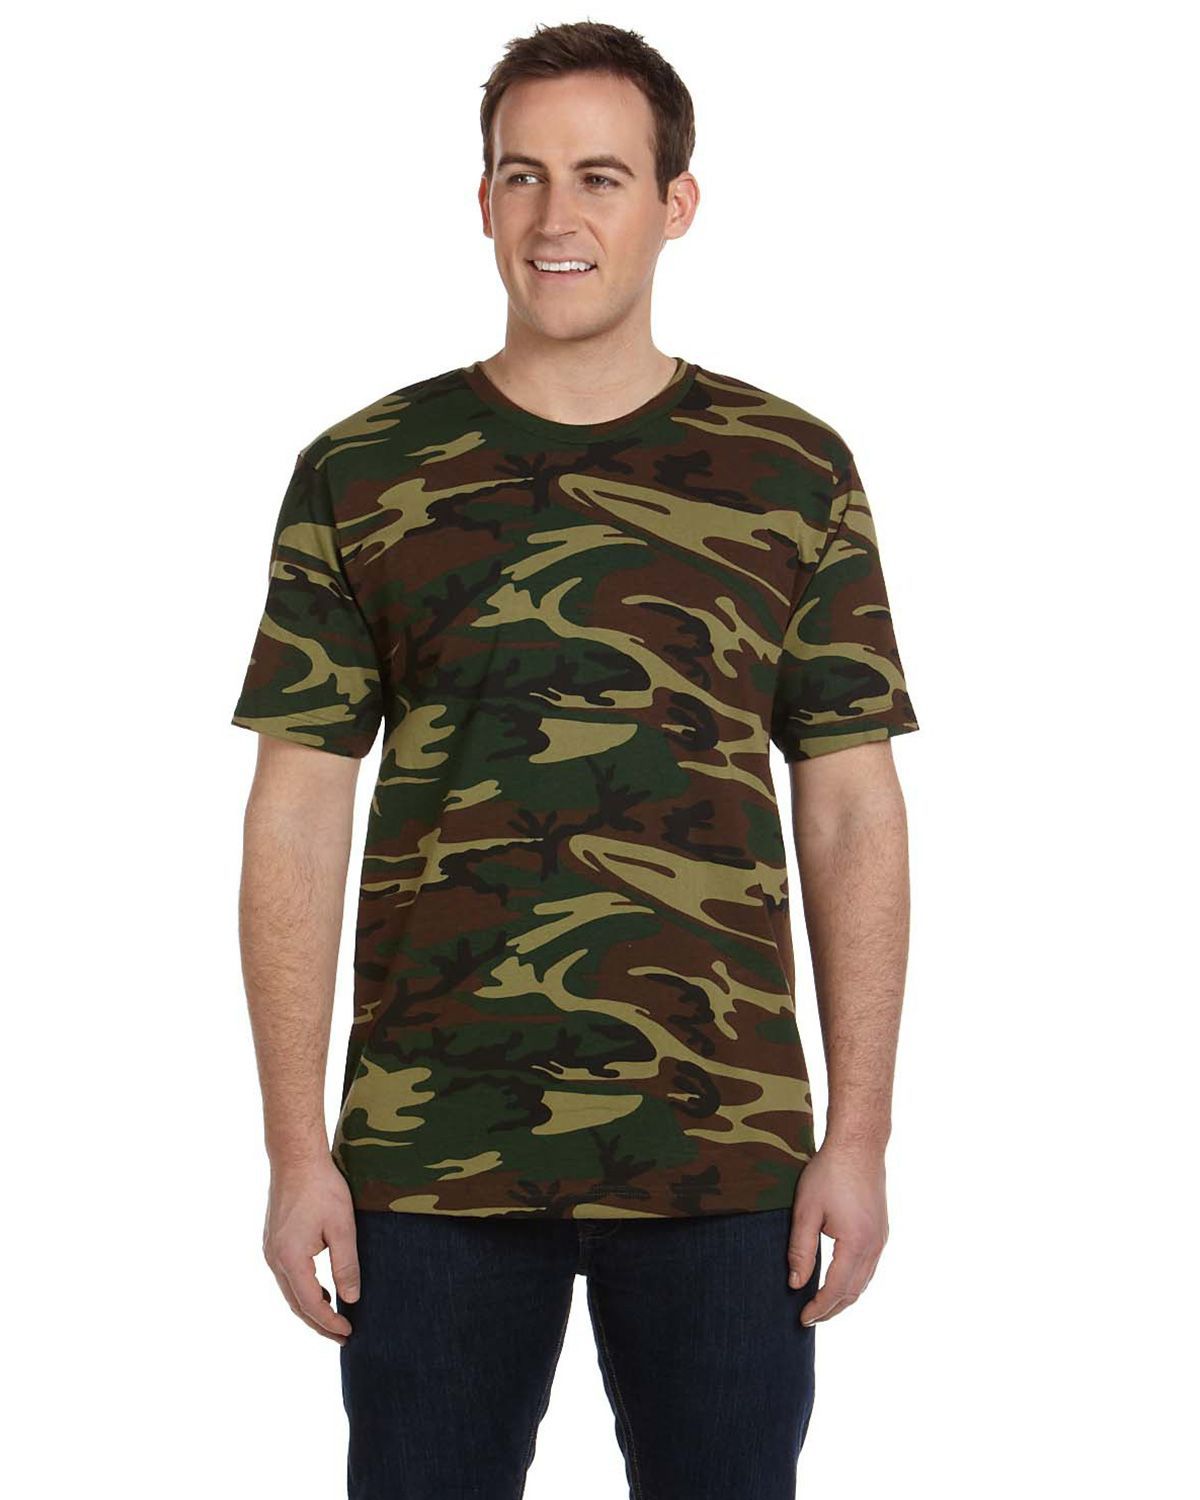 Code Five LS3906 5.5 oz. Adult Camouflage T-Shirt - ApparelnBags.com